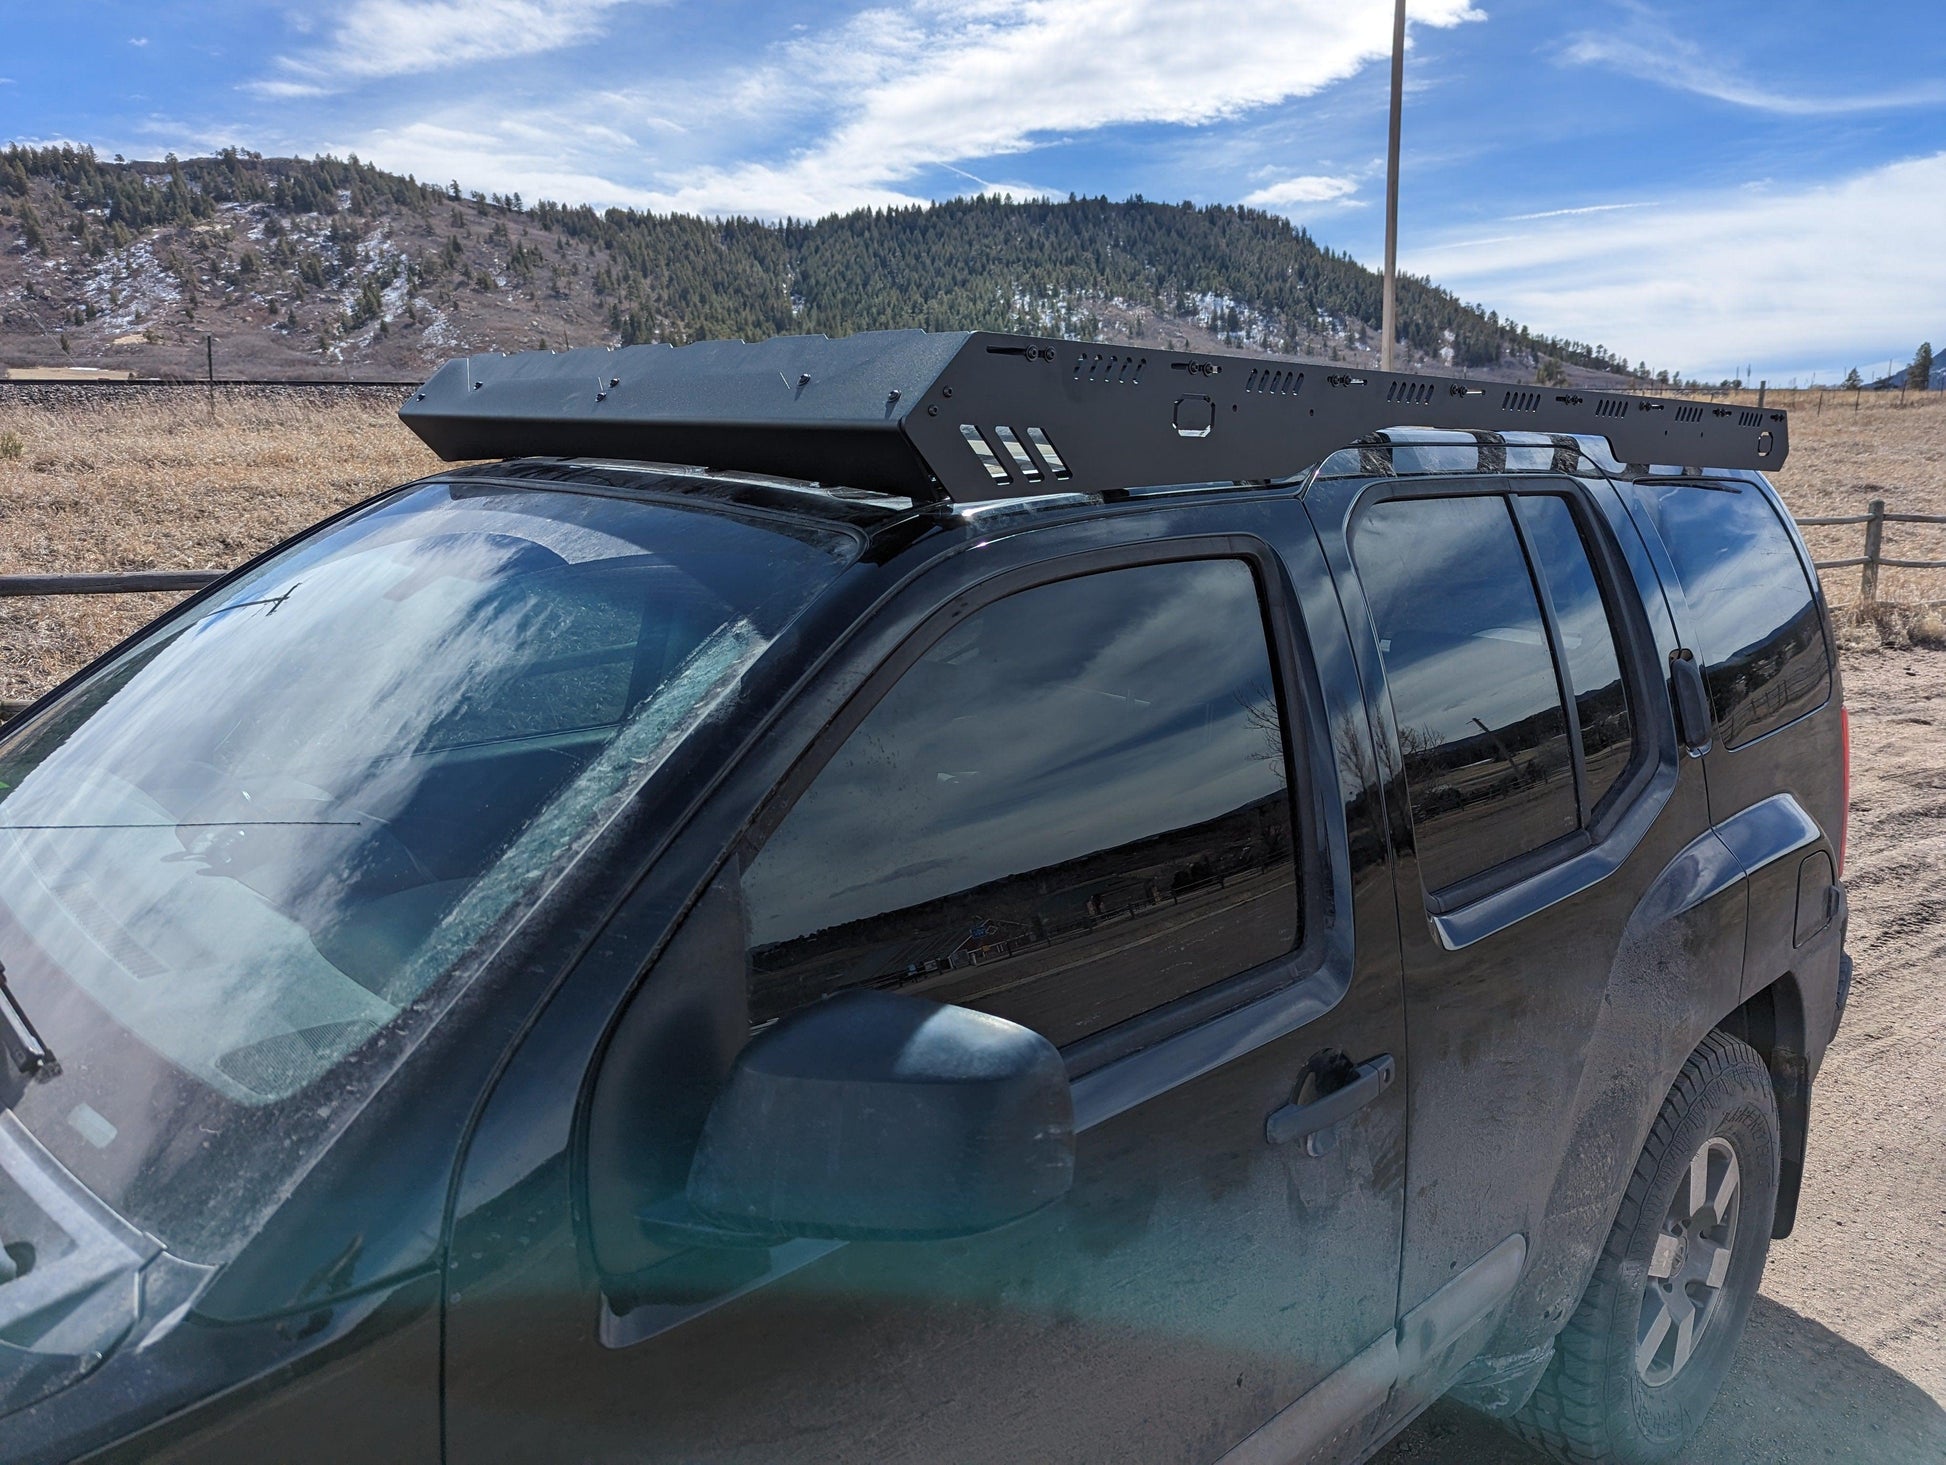 Bravo Nissan XTerra Roof Rack (2005-2015)-Overland Roof Rack-upTOP Overland-upTOP Overland